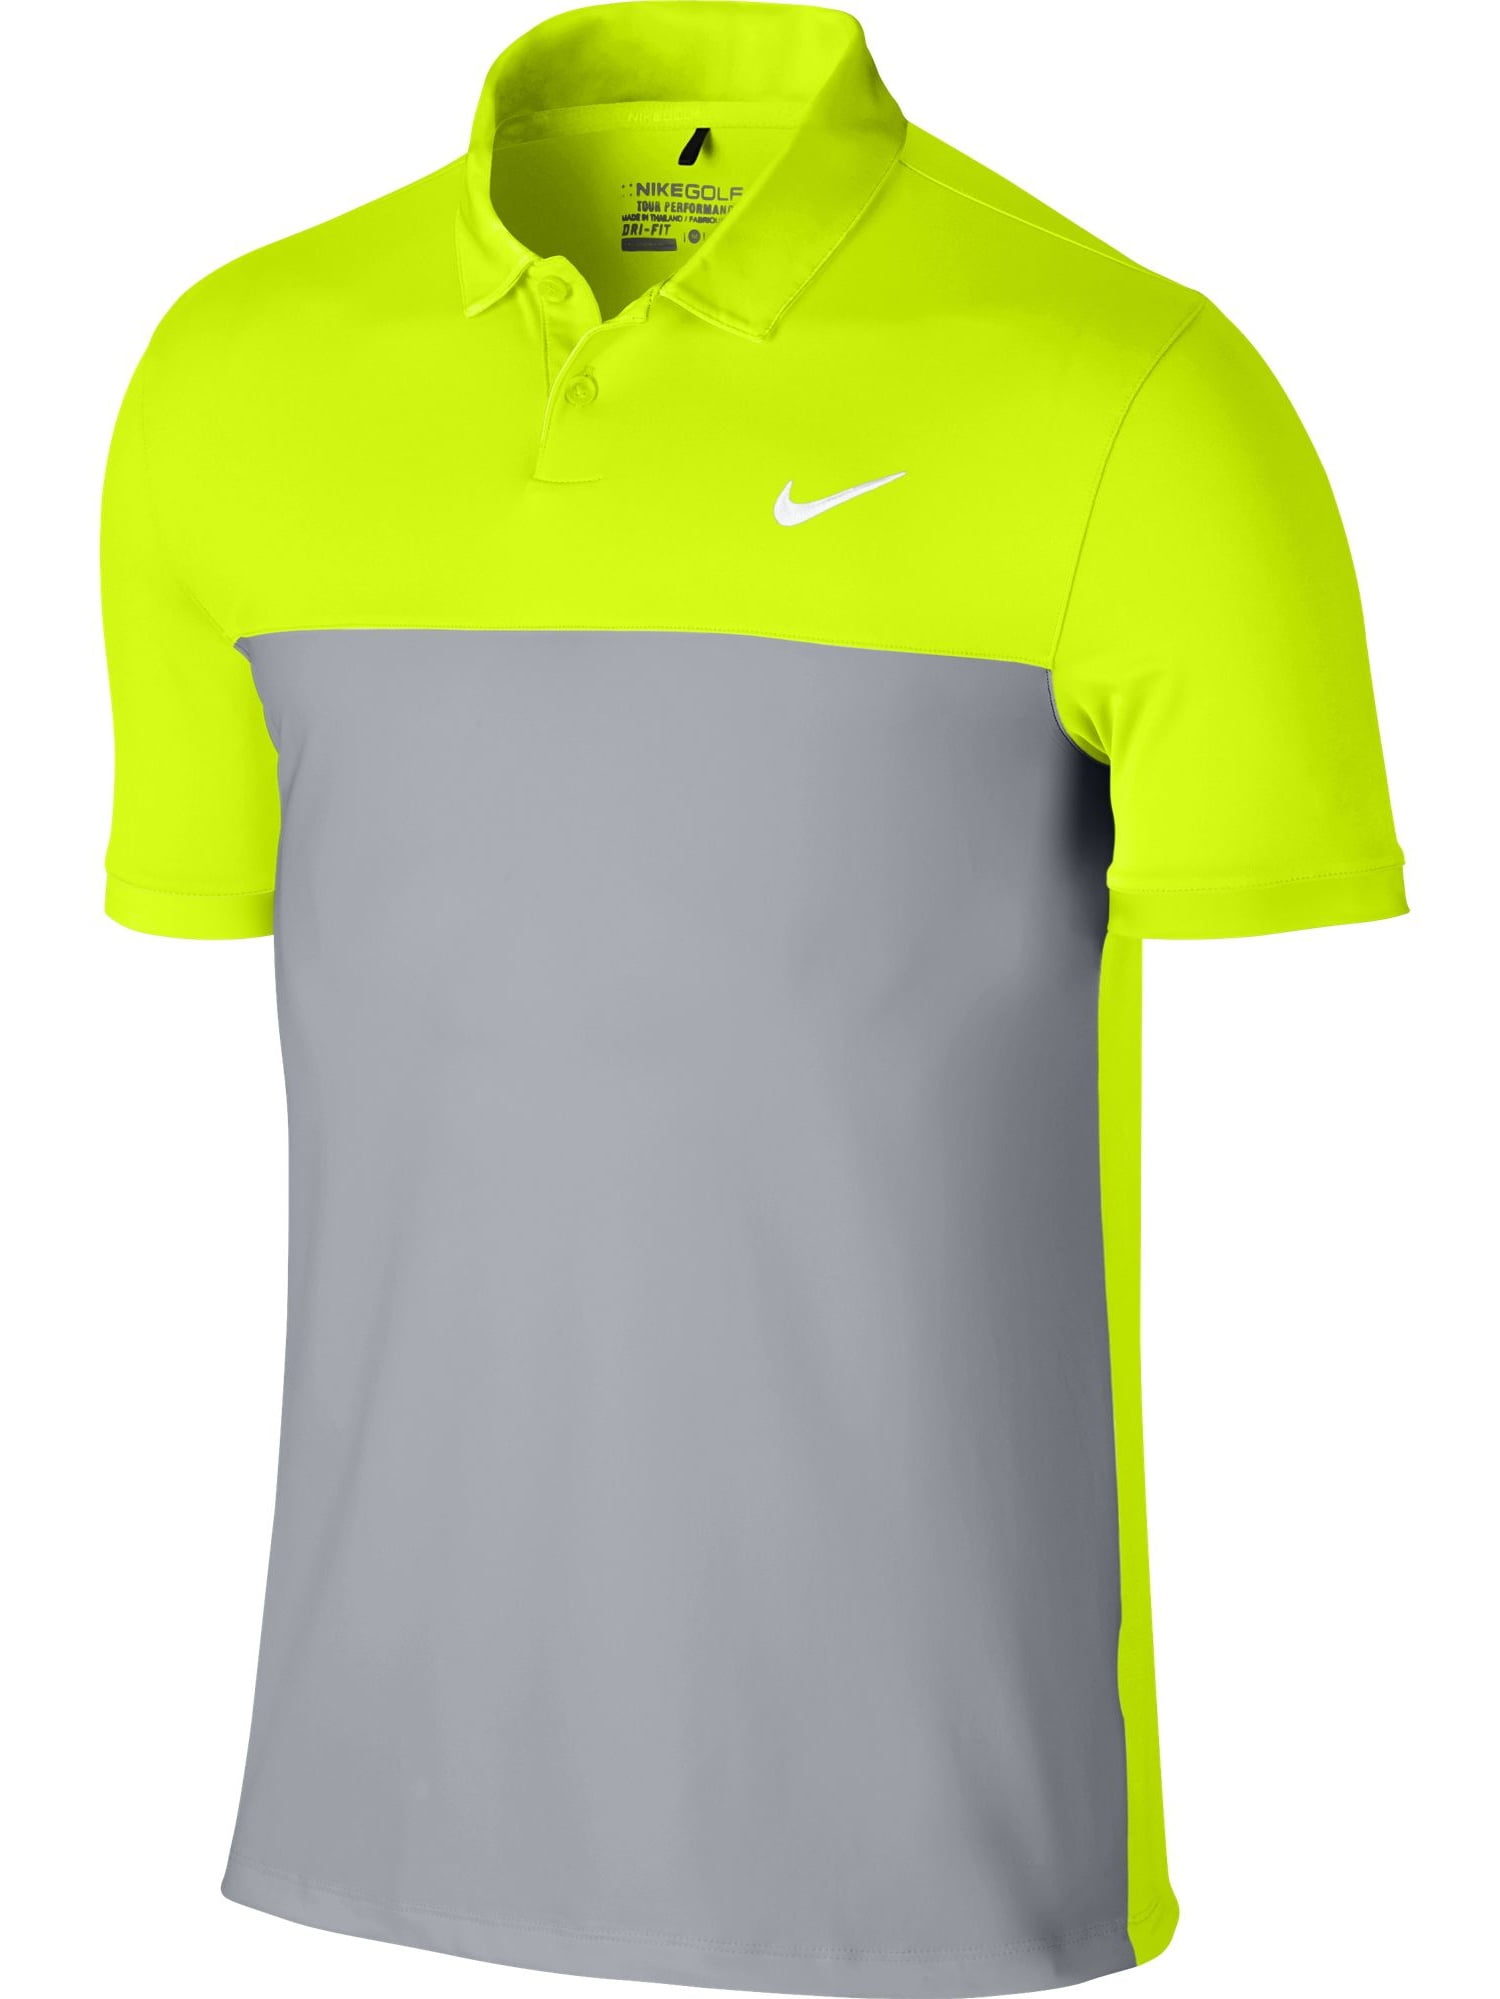 Nike - Nike 2016 Icon Color Block Polo - Walmart.com - Walmart.com